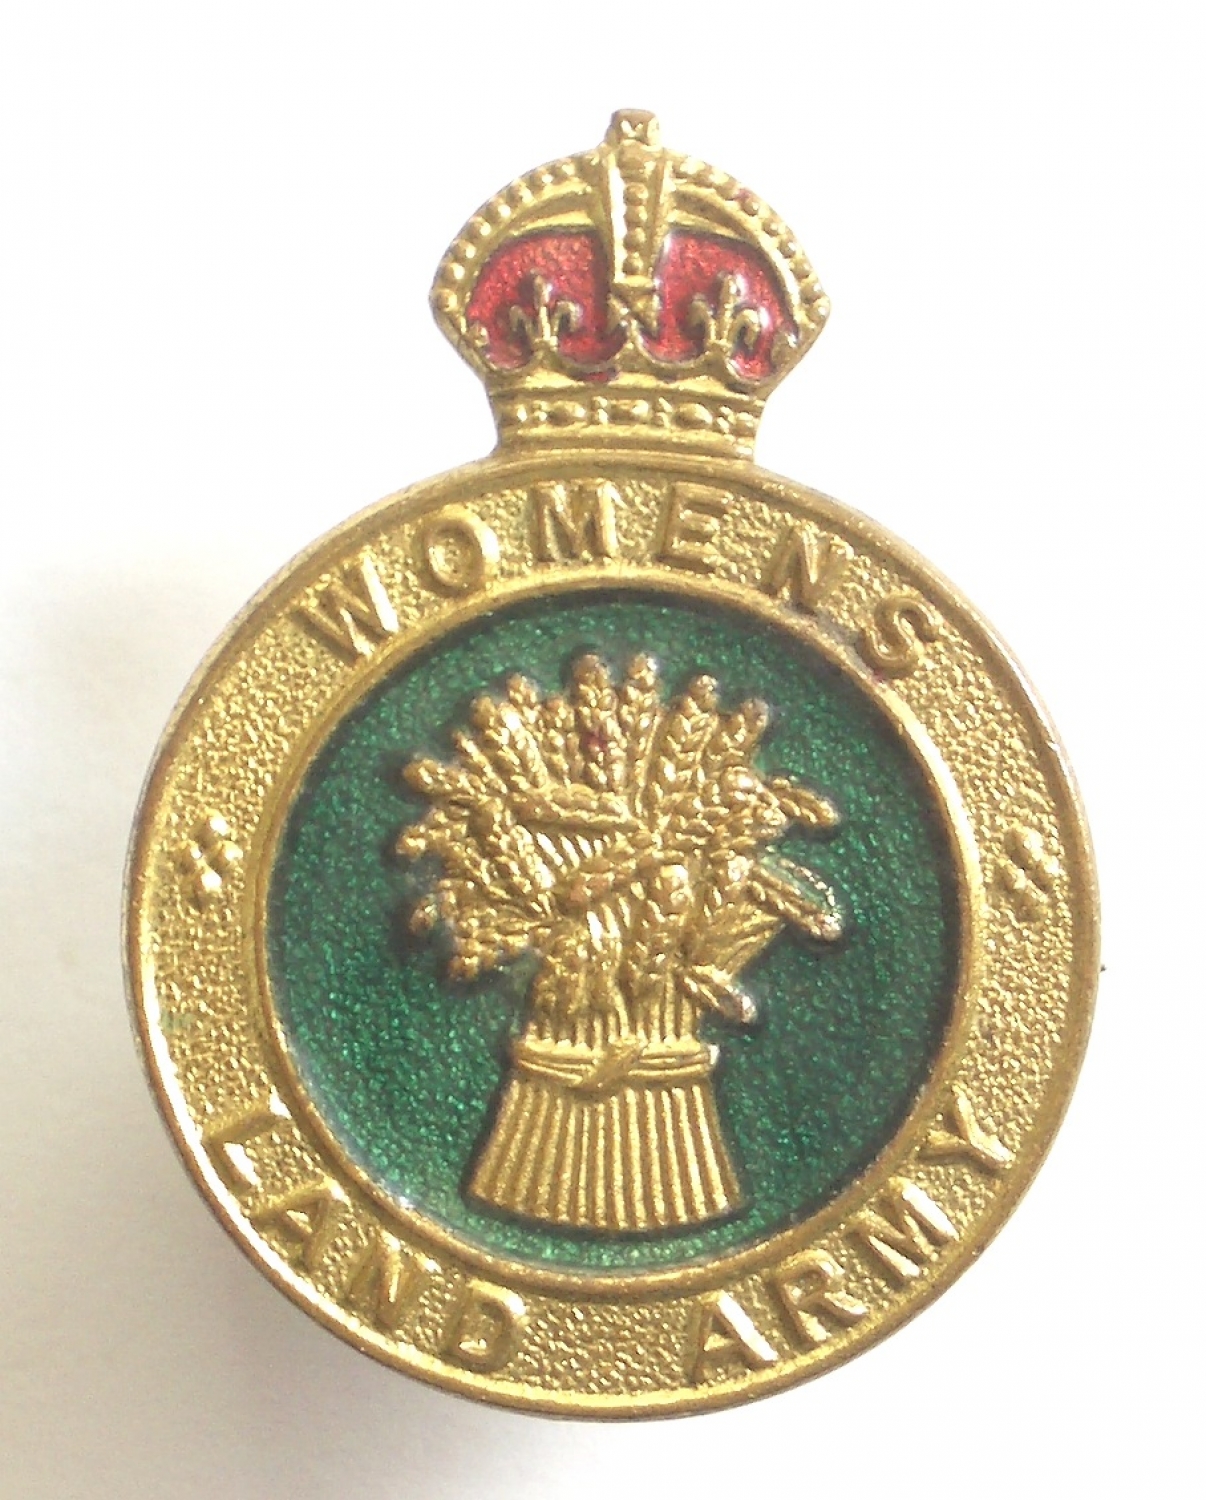 Womens Land Army WW2 cap / breast badge